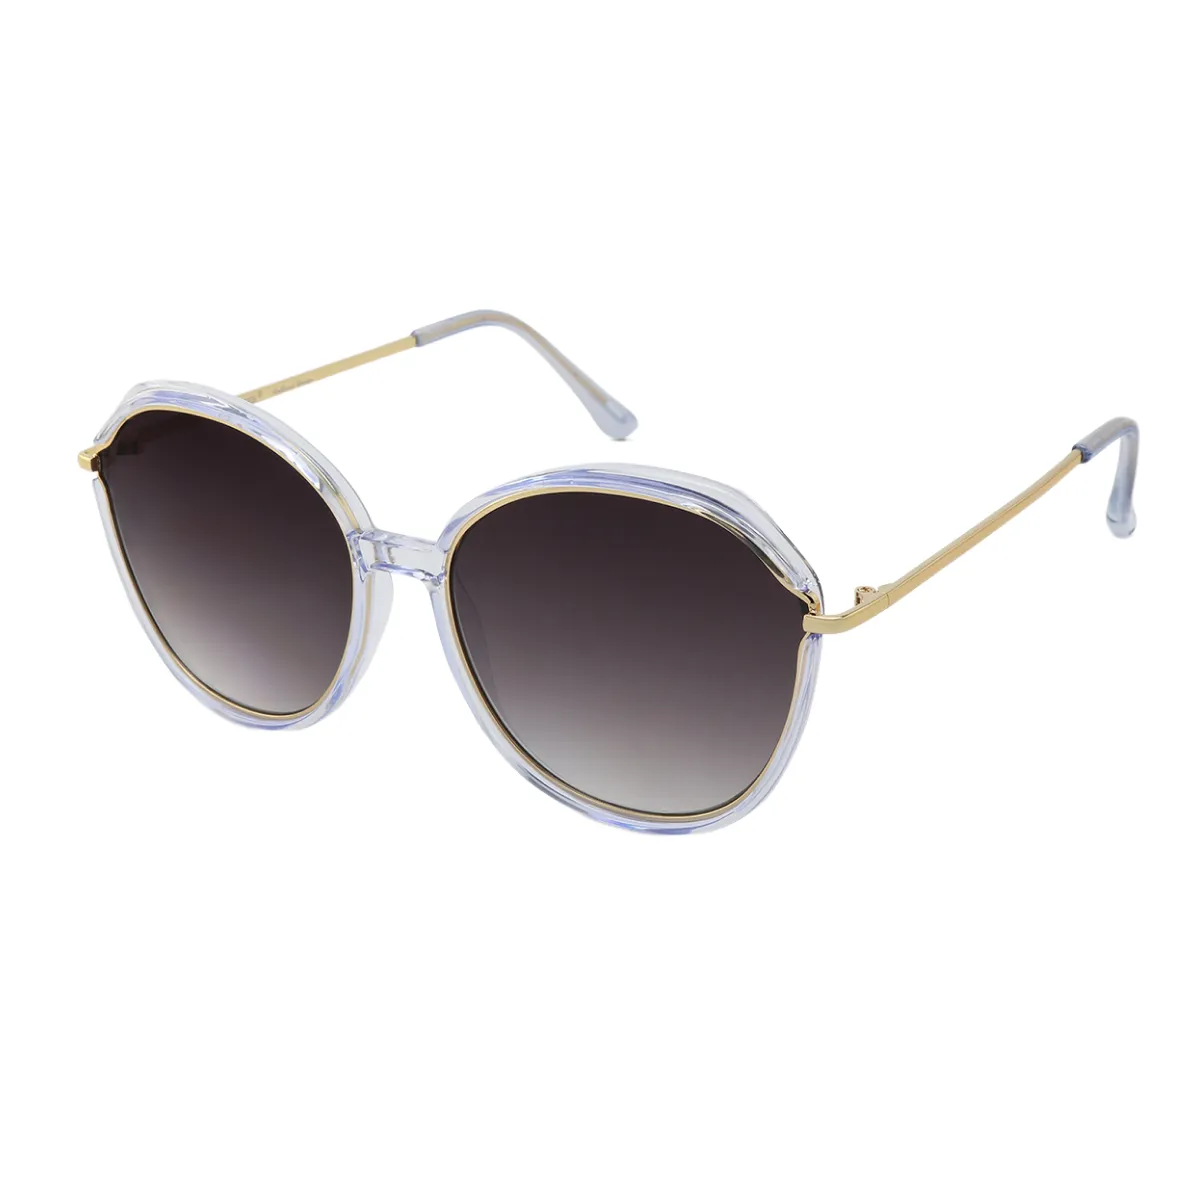 Susanna - Round Transpartent Gold Sunglasses for Women